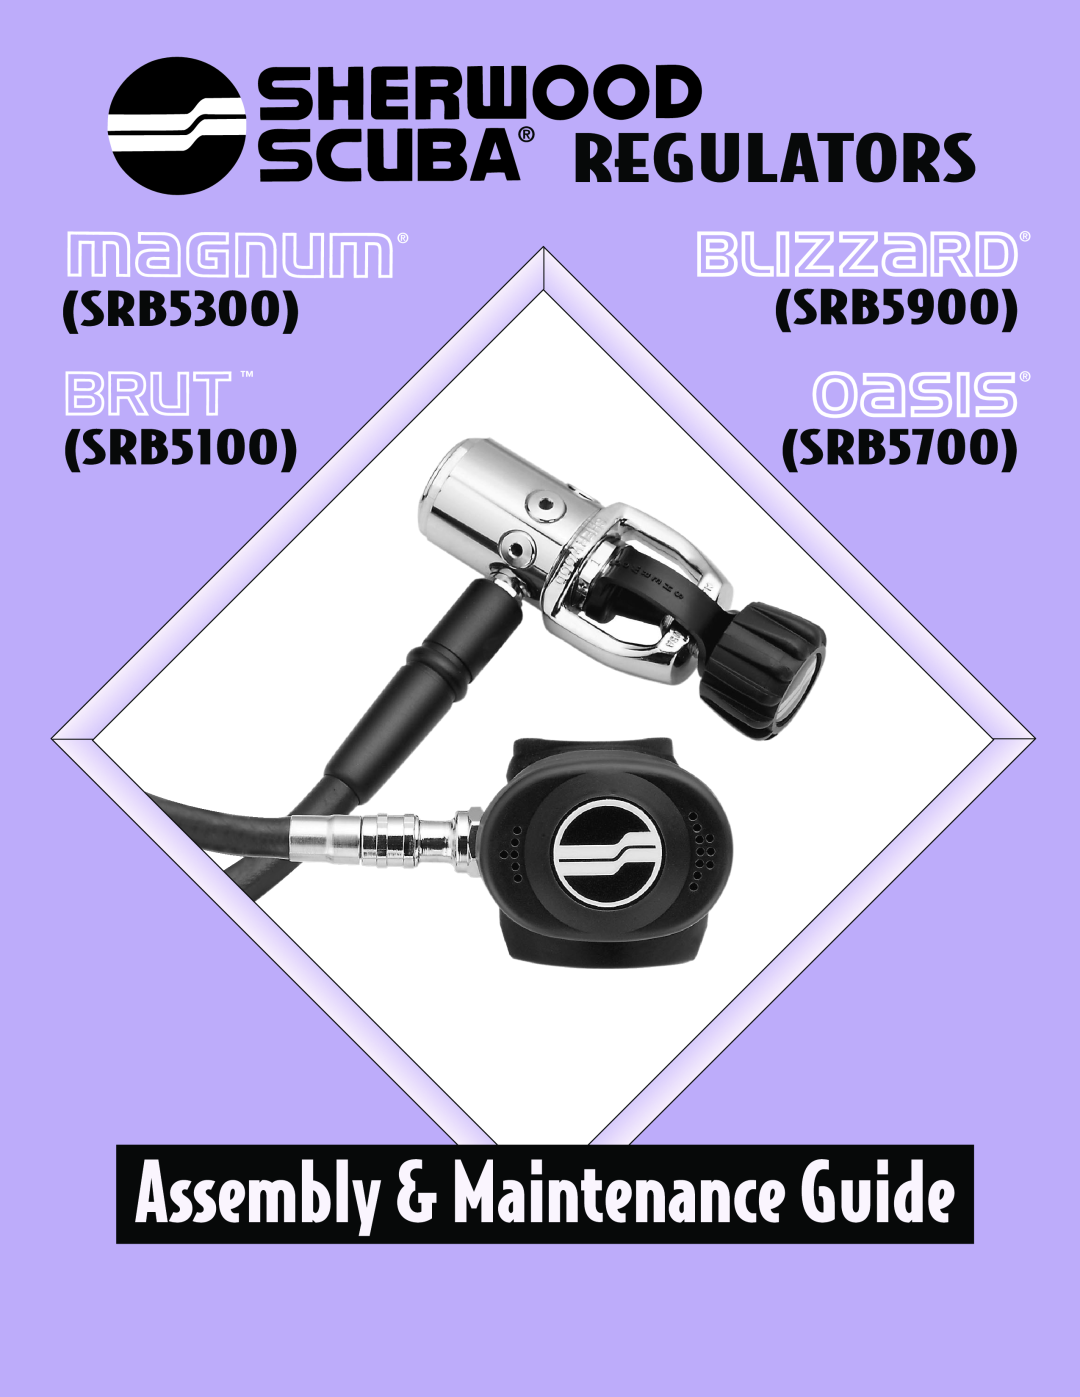 Sherwood SRB5900 manual Regulators, Assembly & Maintenance Guide, SRB5300, SRB5100, SRB5700 